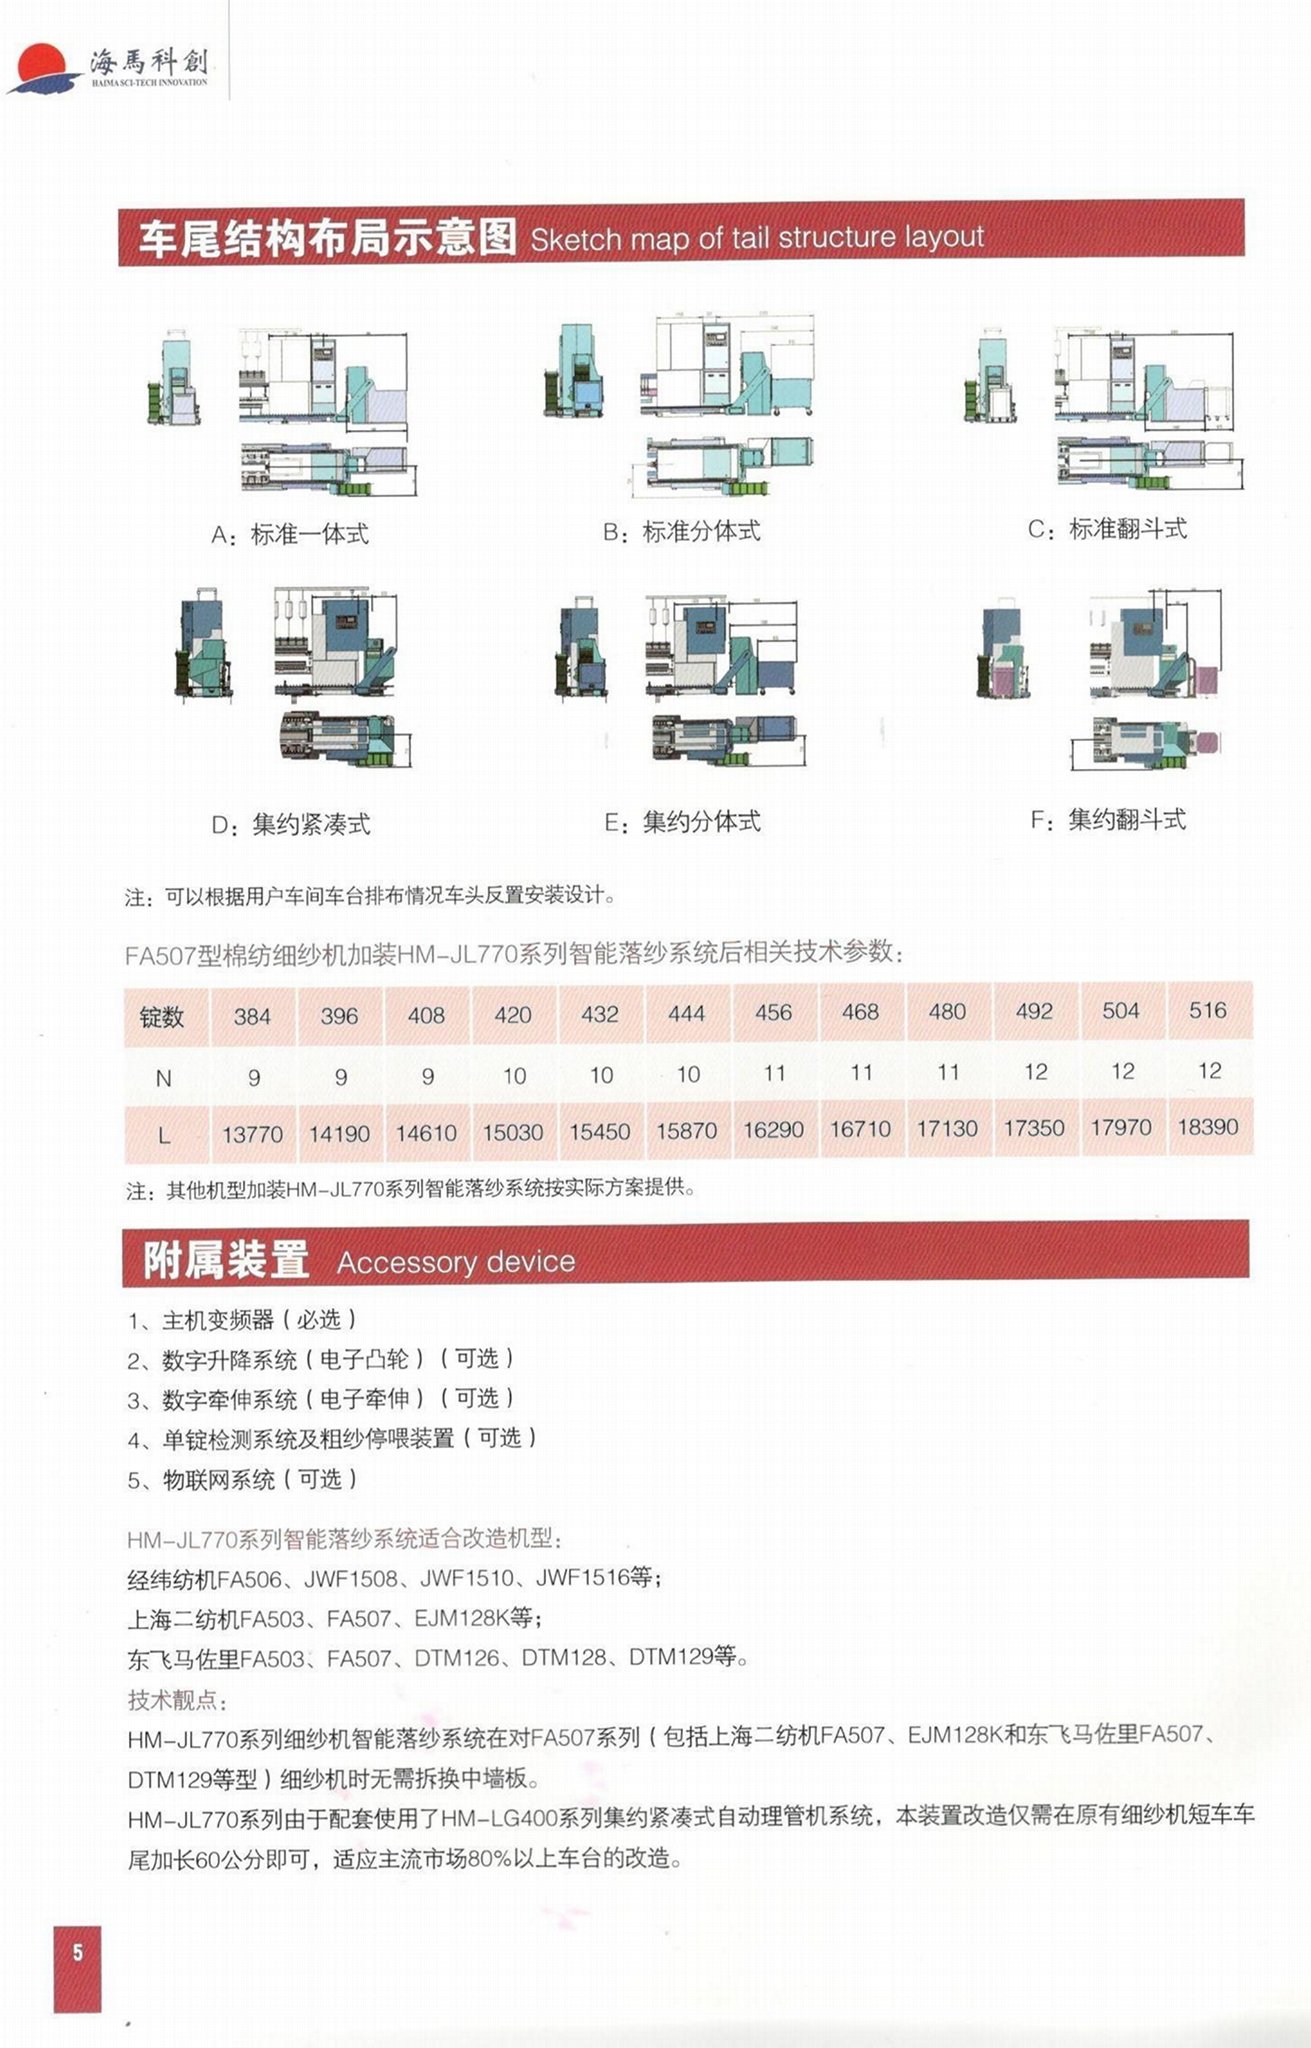 HM-JL770系列細紗機智能落紗系統 4